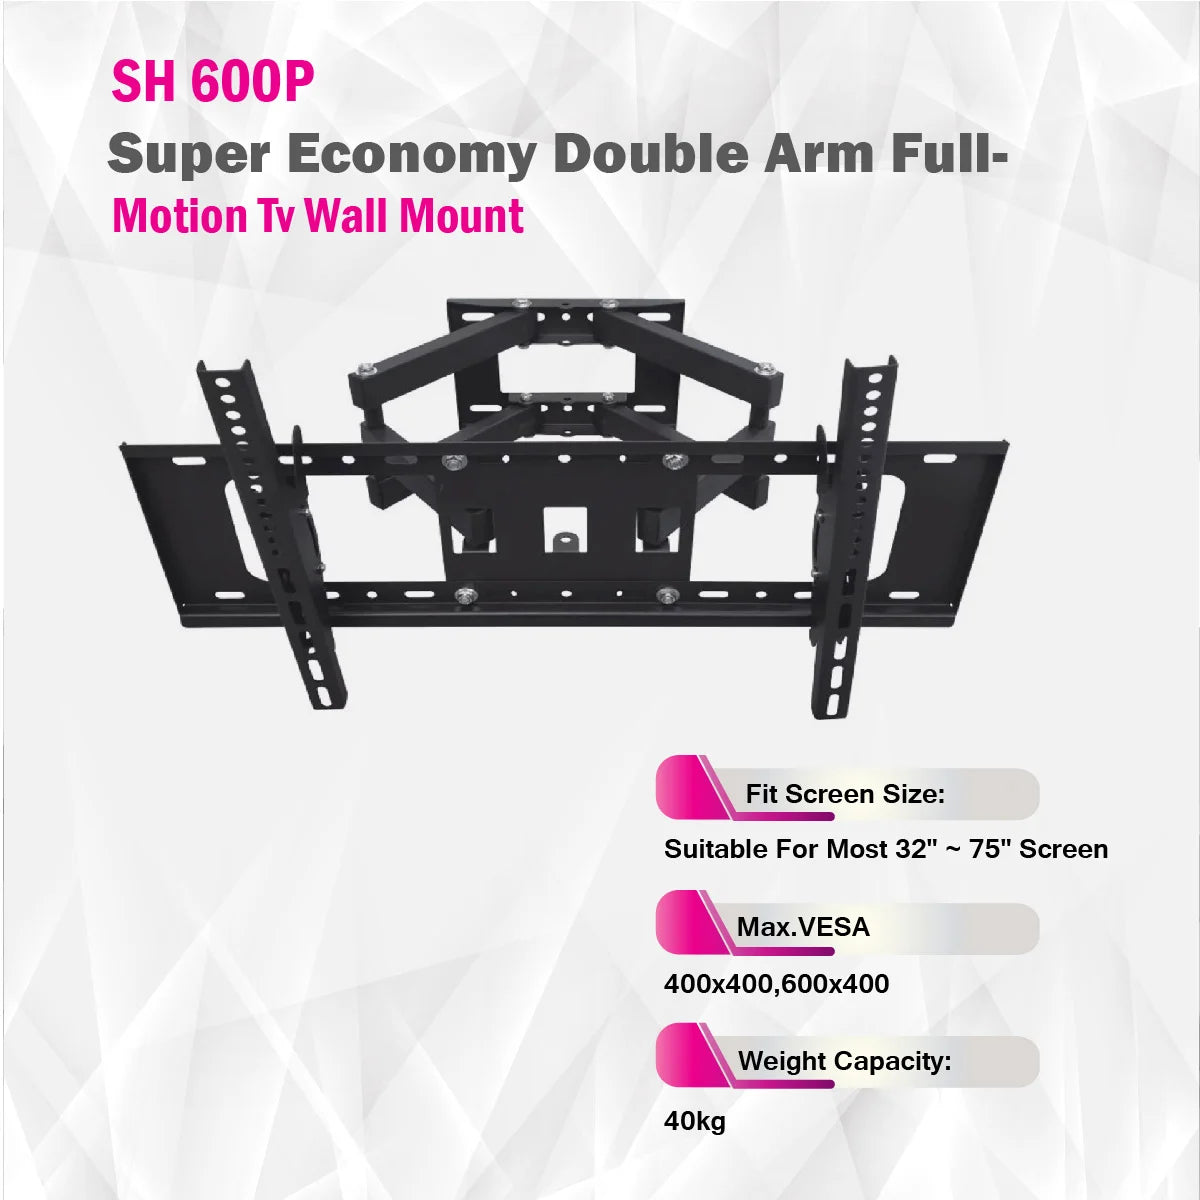 SkillTech - SH 600P - Super Economy Double Arm Full-Motion Tv Wall Mount